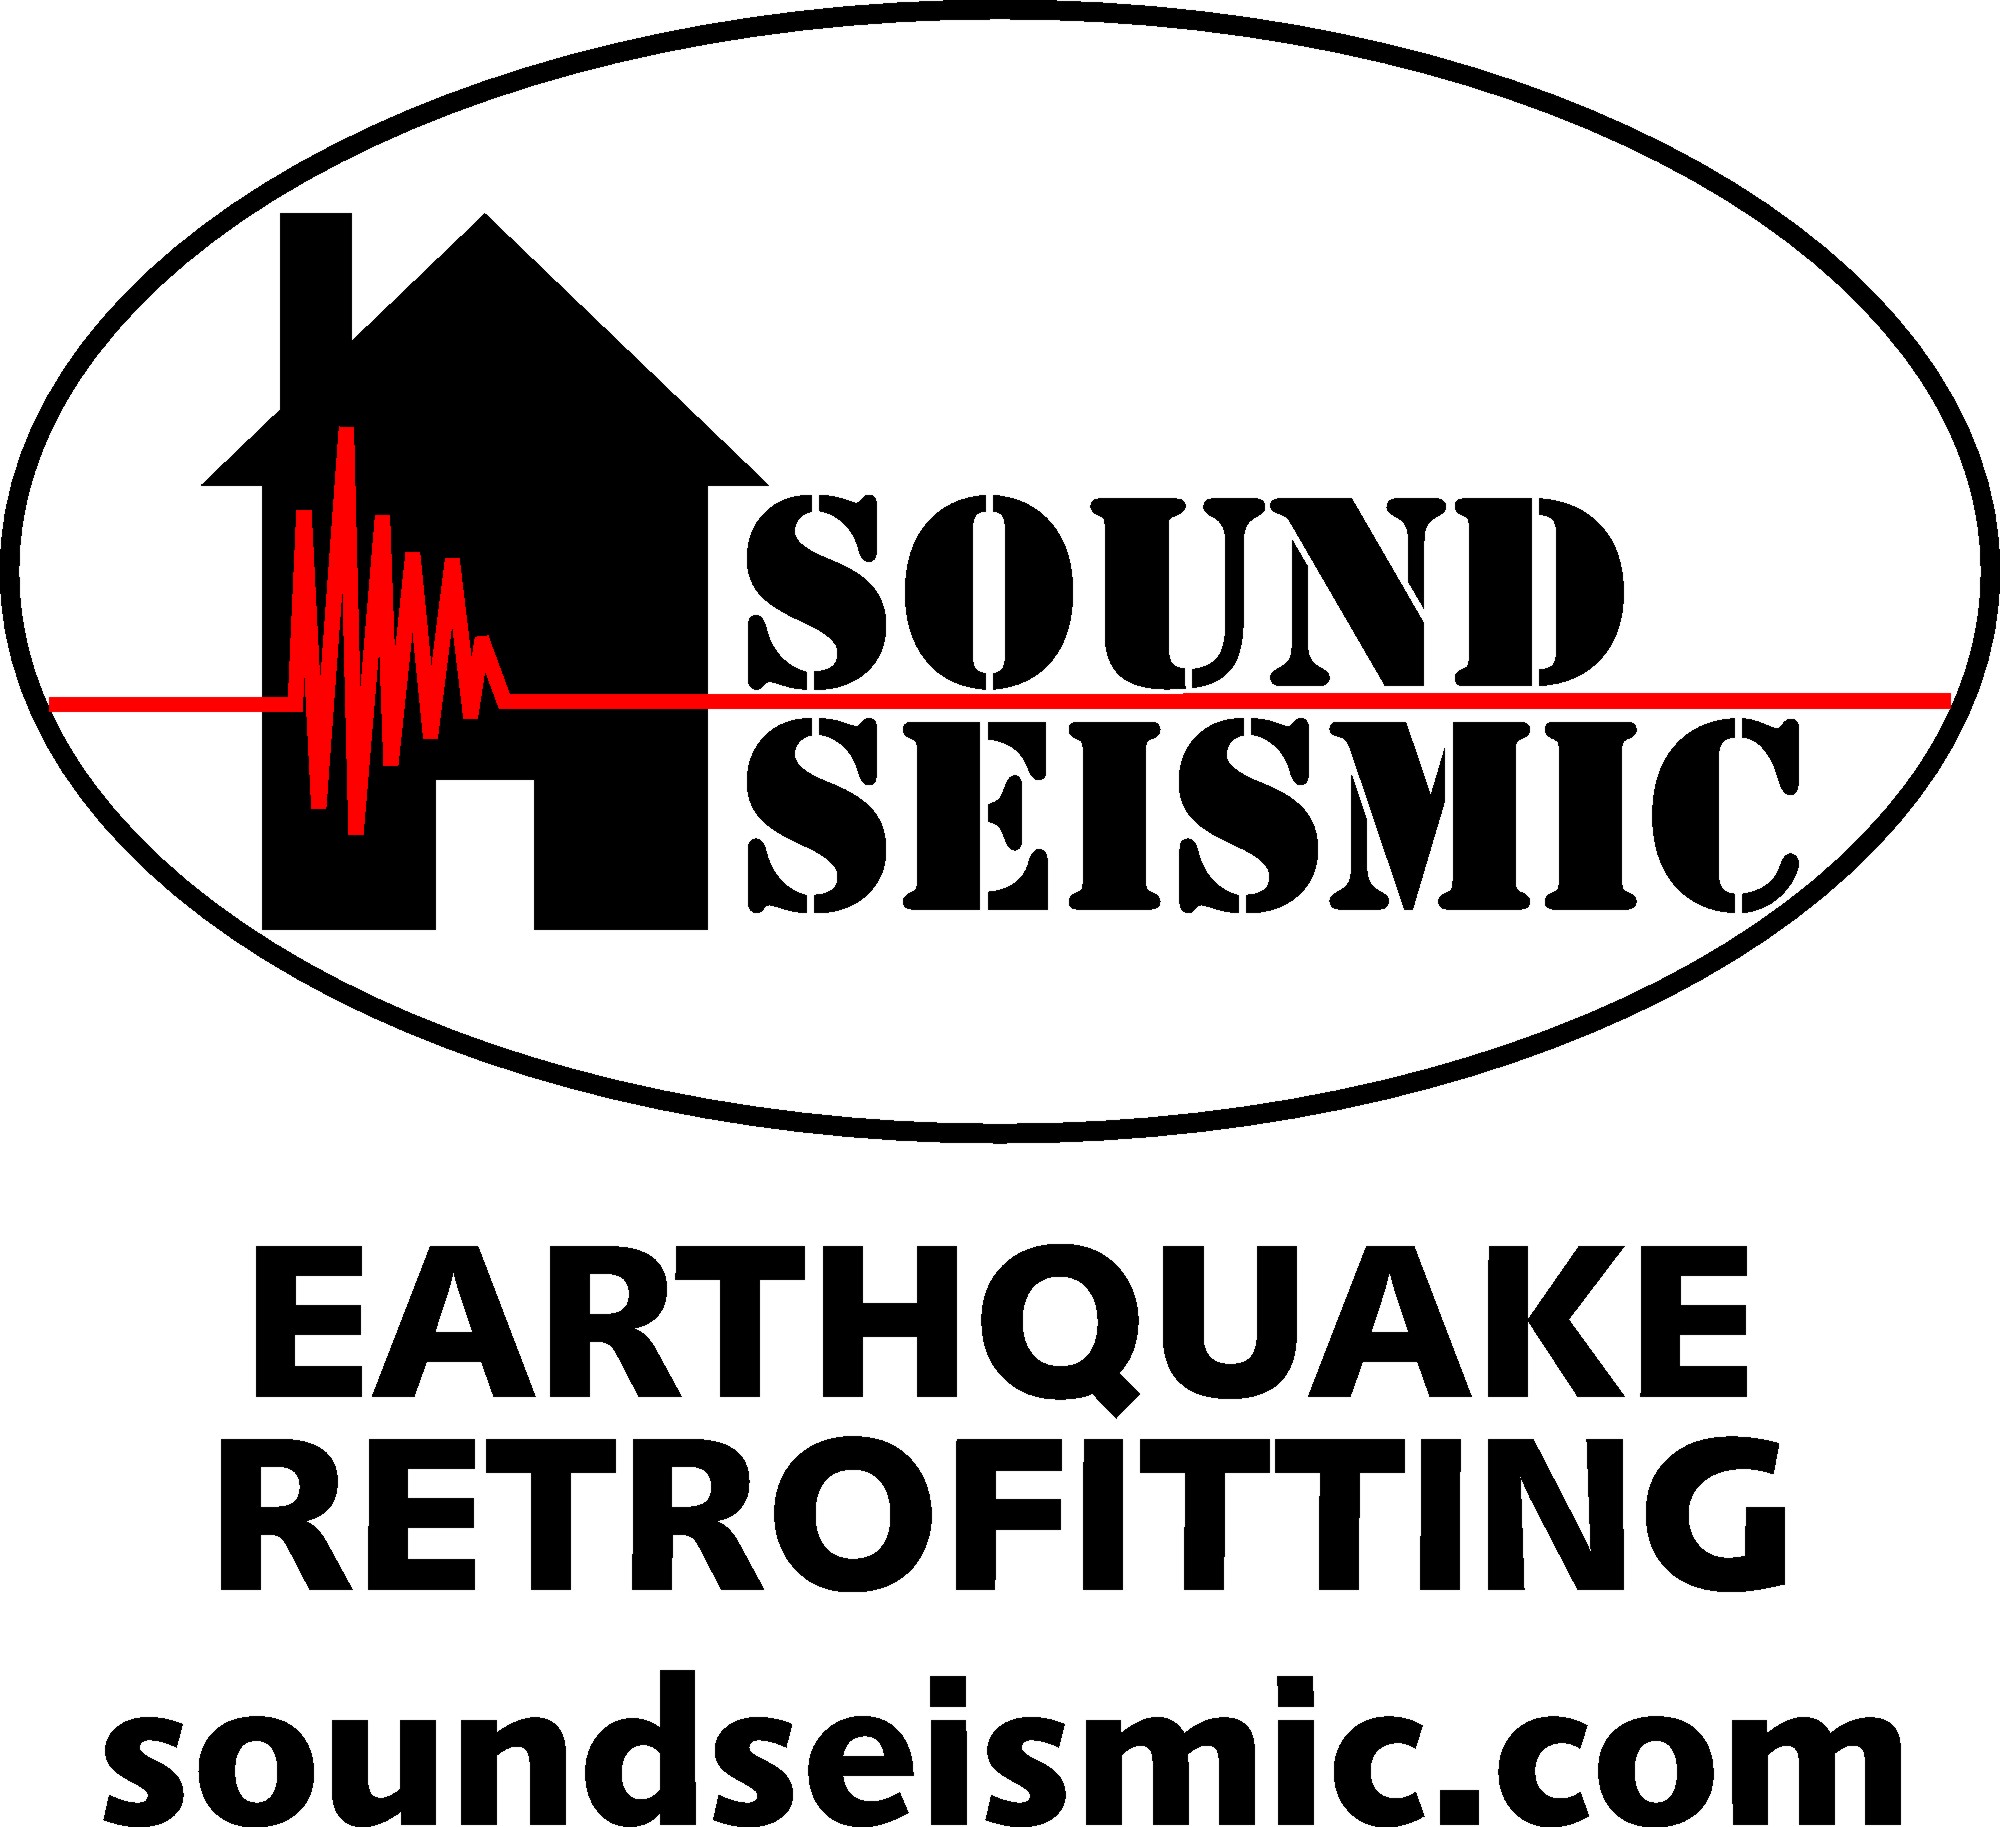 earthquake sound logo